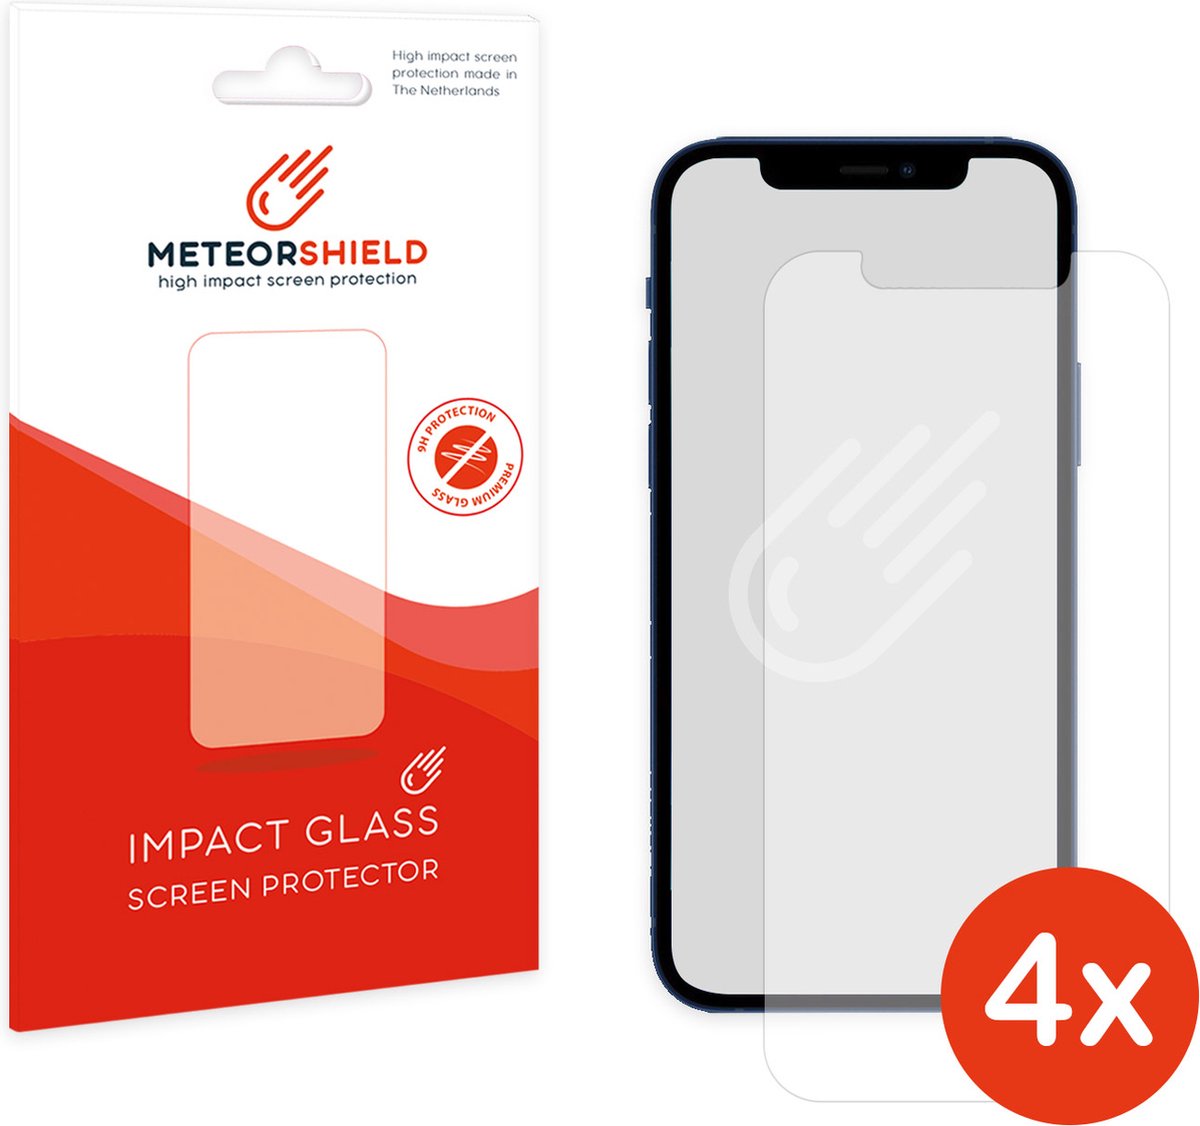 4 stuks: Meteorshield iPhone 12 Pro screenprotector - Ultra clear impact glass